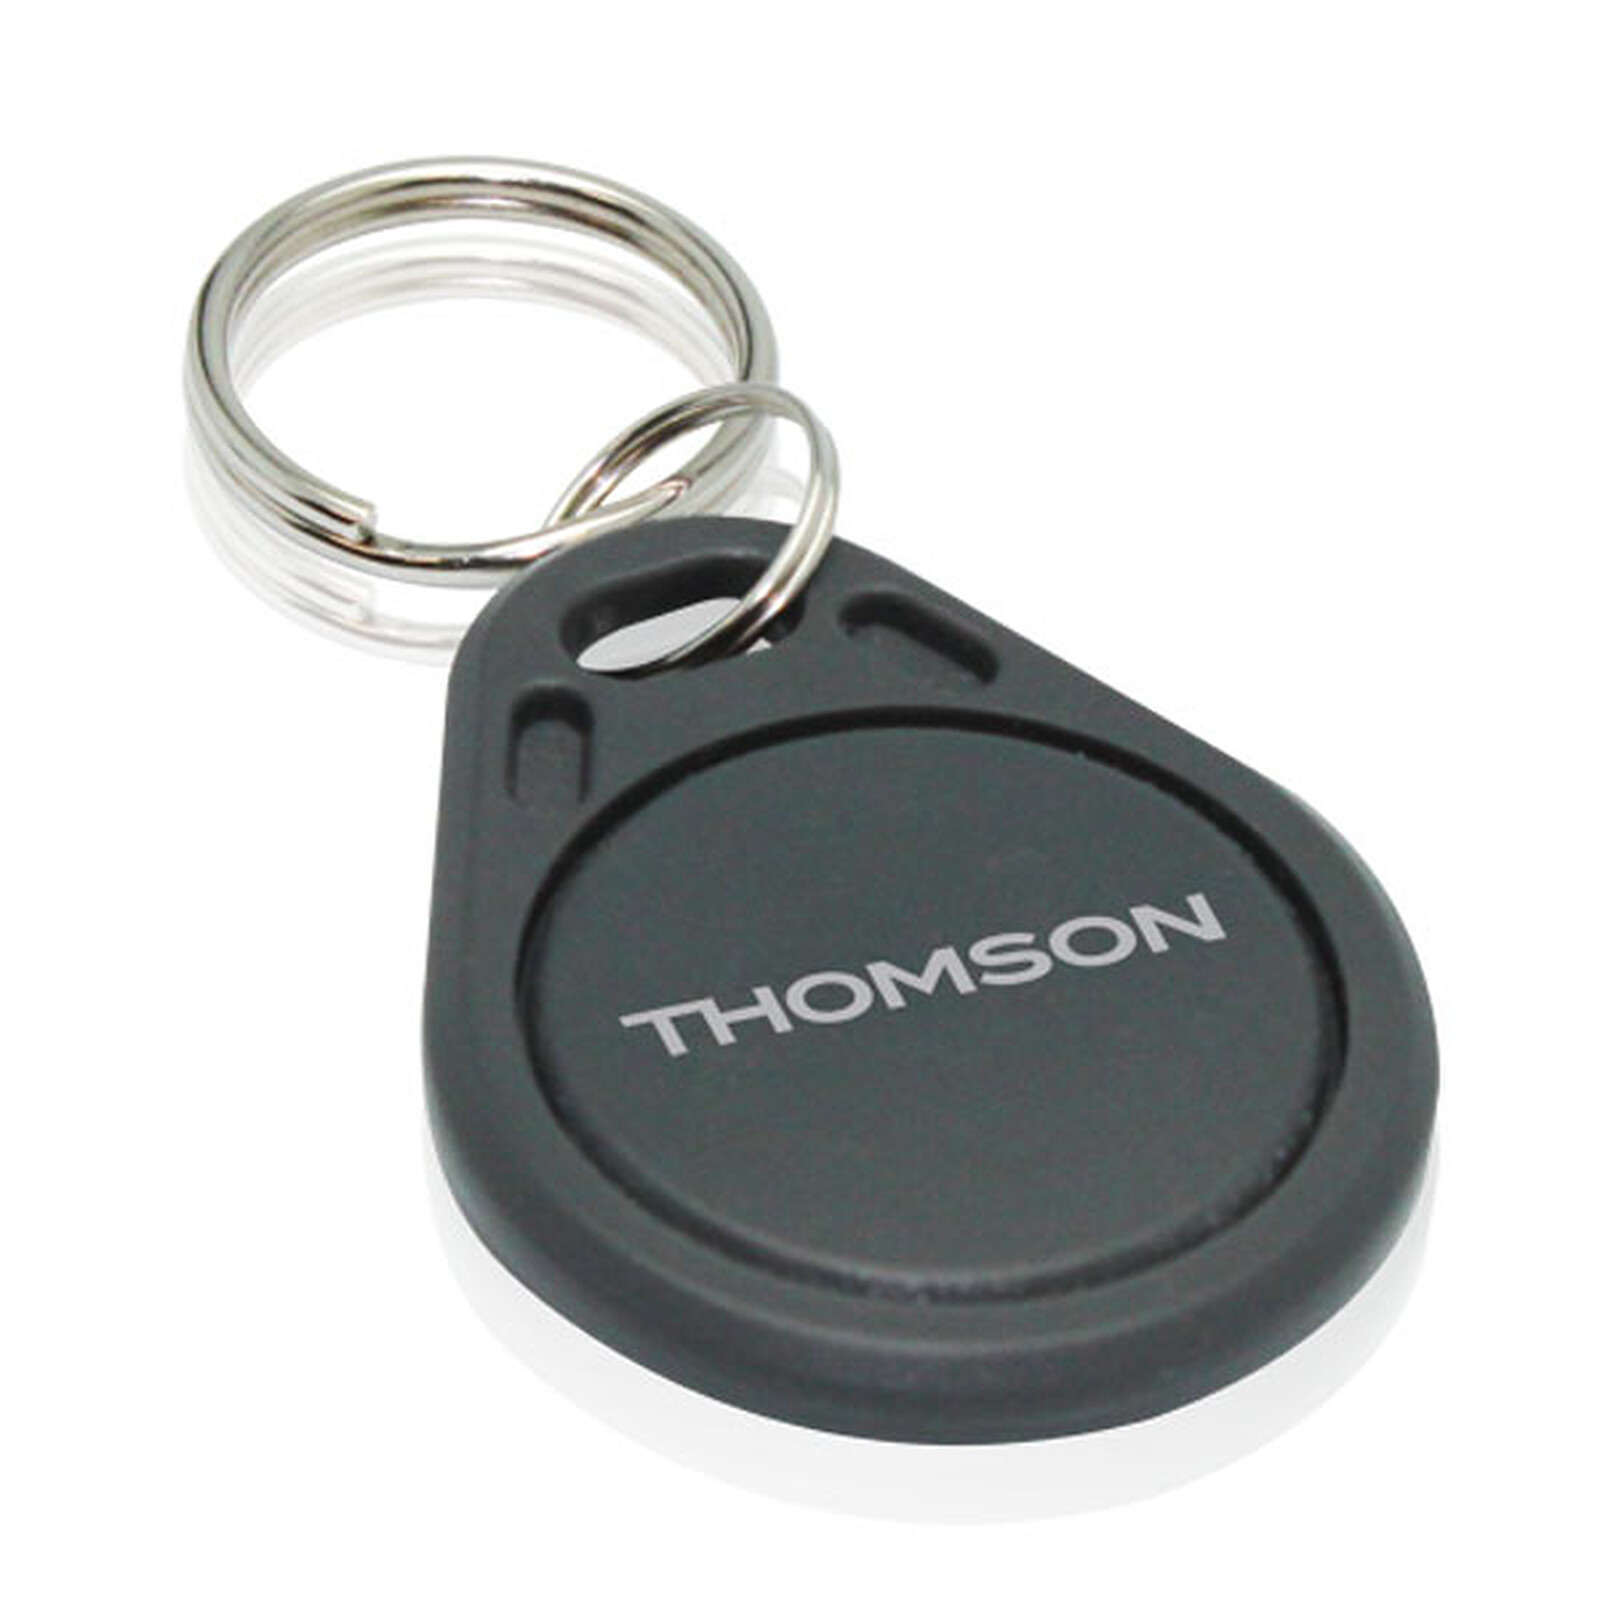 Thomson badge RFID - Autres - LDLC